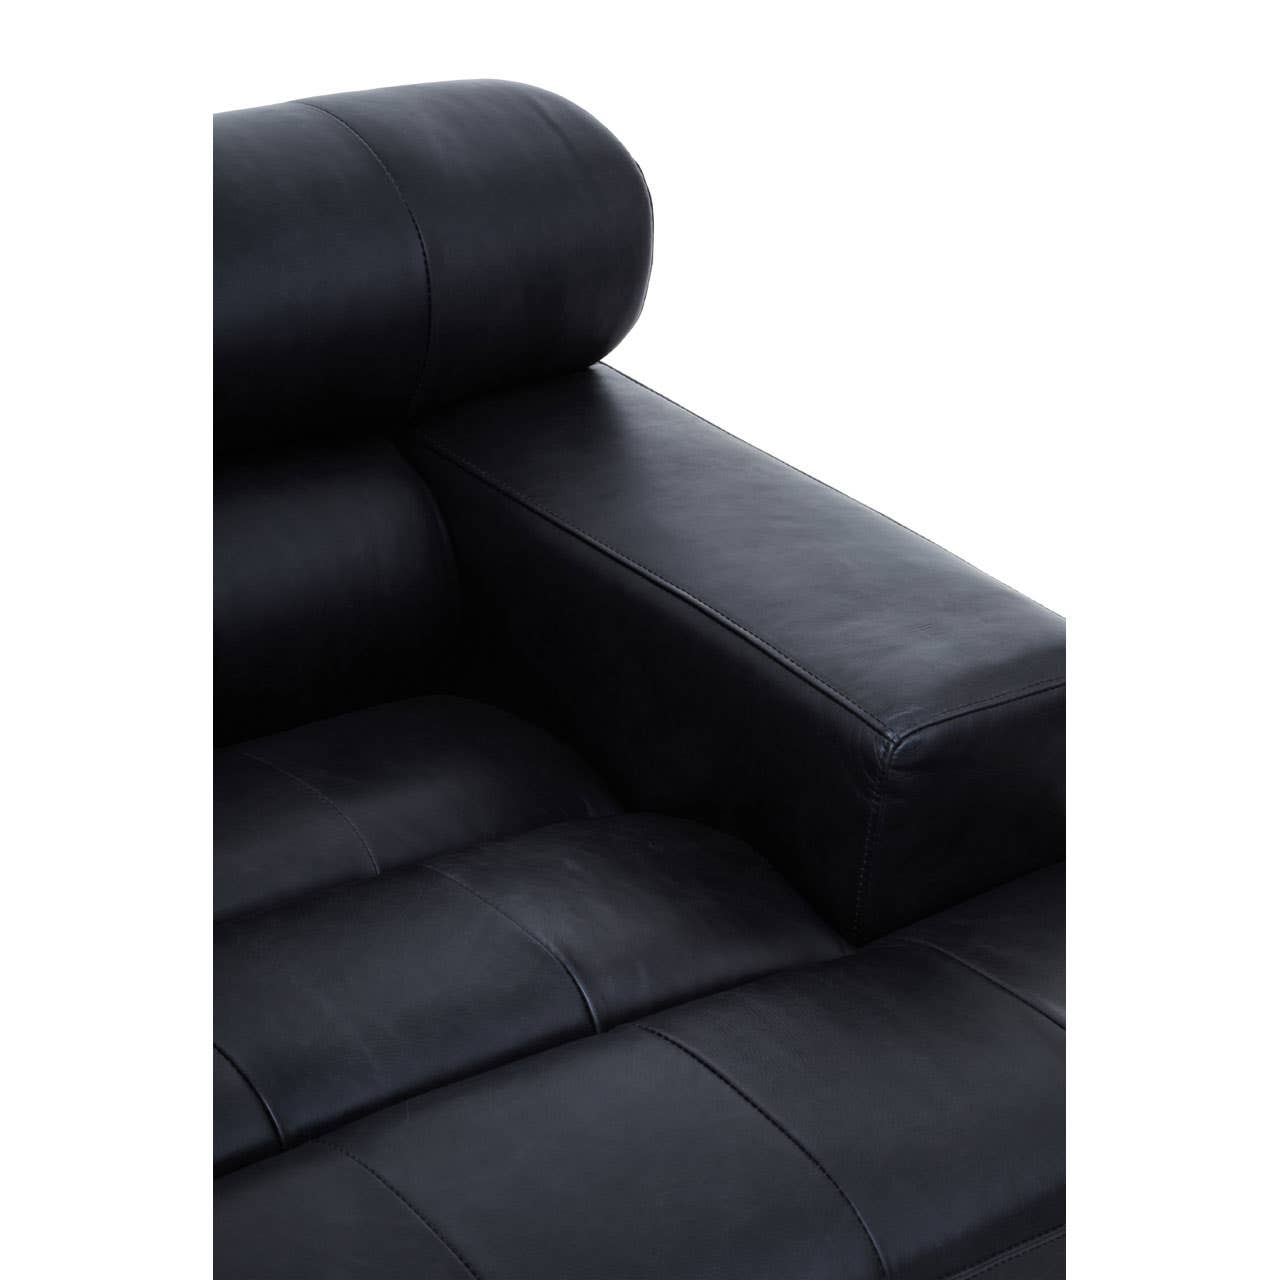 King Distressed Slate Leather Left Seat